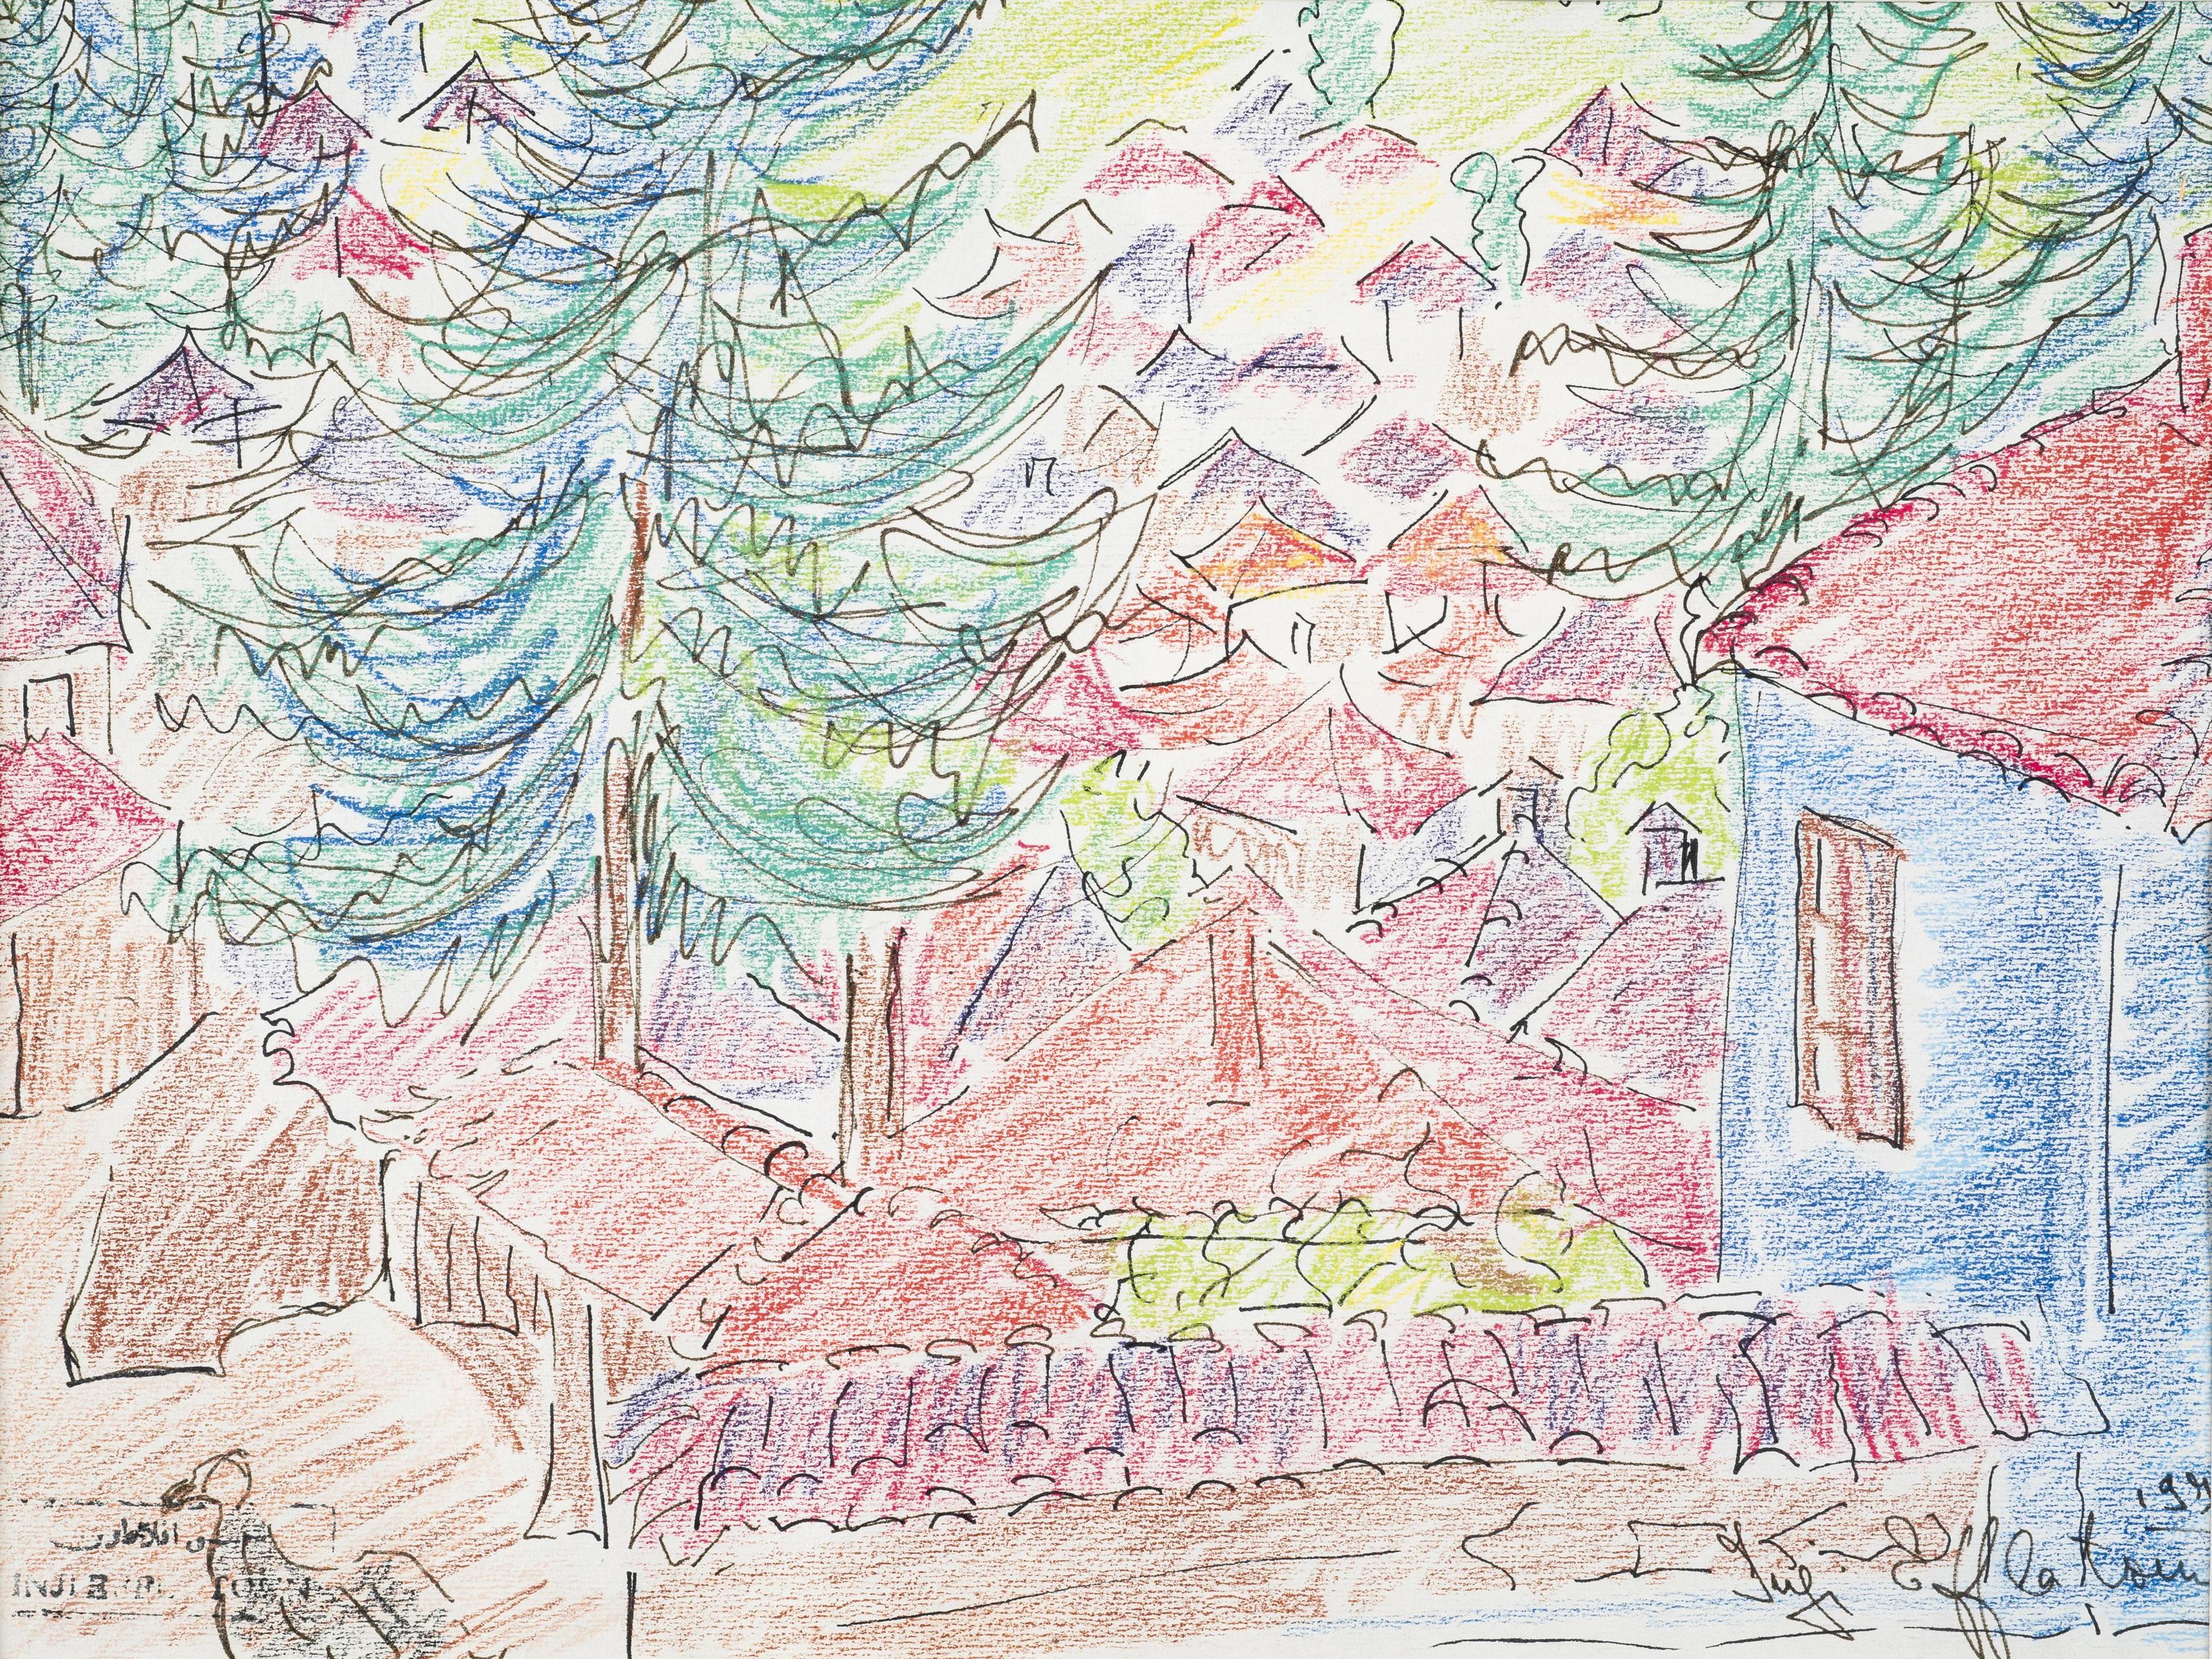 Inji EFFLATOUN Landscape Painting - "Alpine Village III" Pastel on Paper Painting 10" x 12" in by Inji Efflatoun